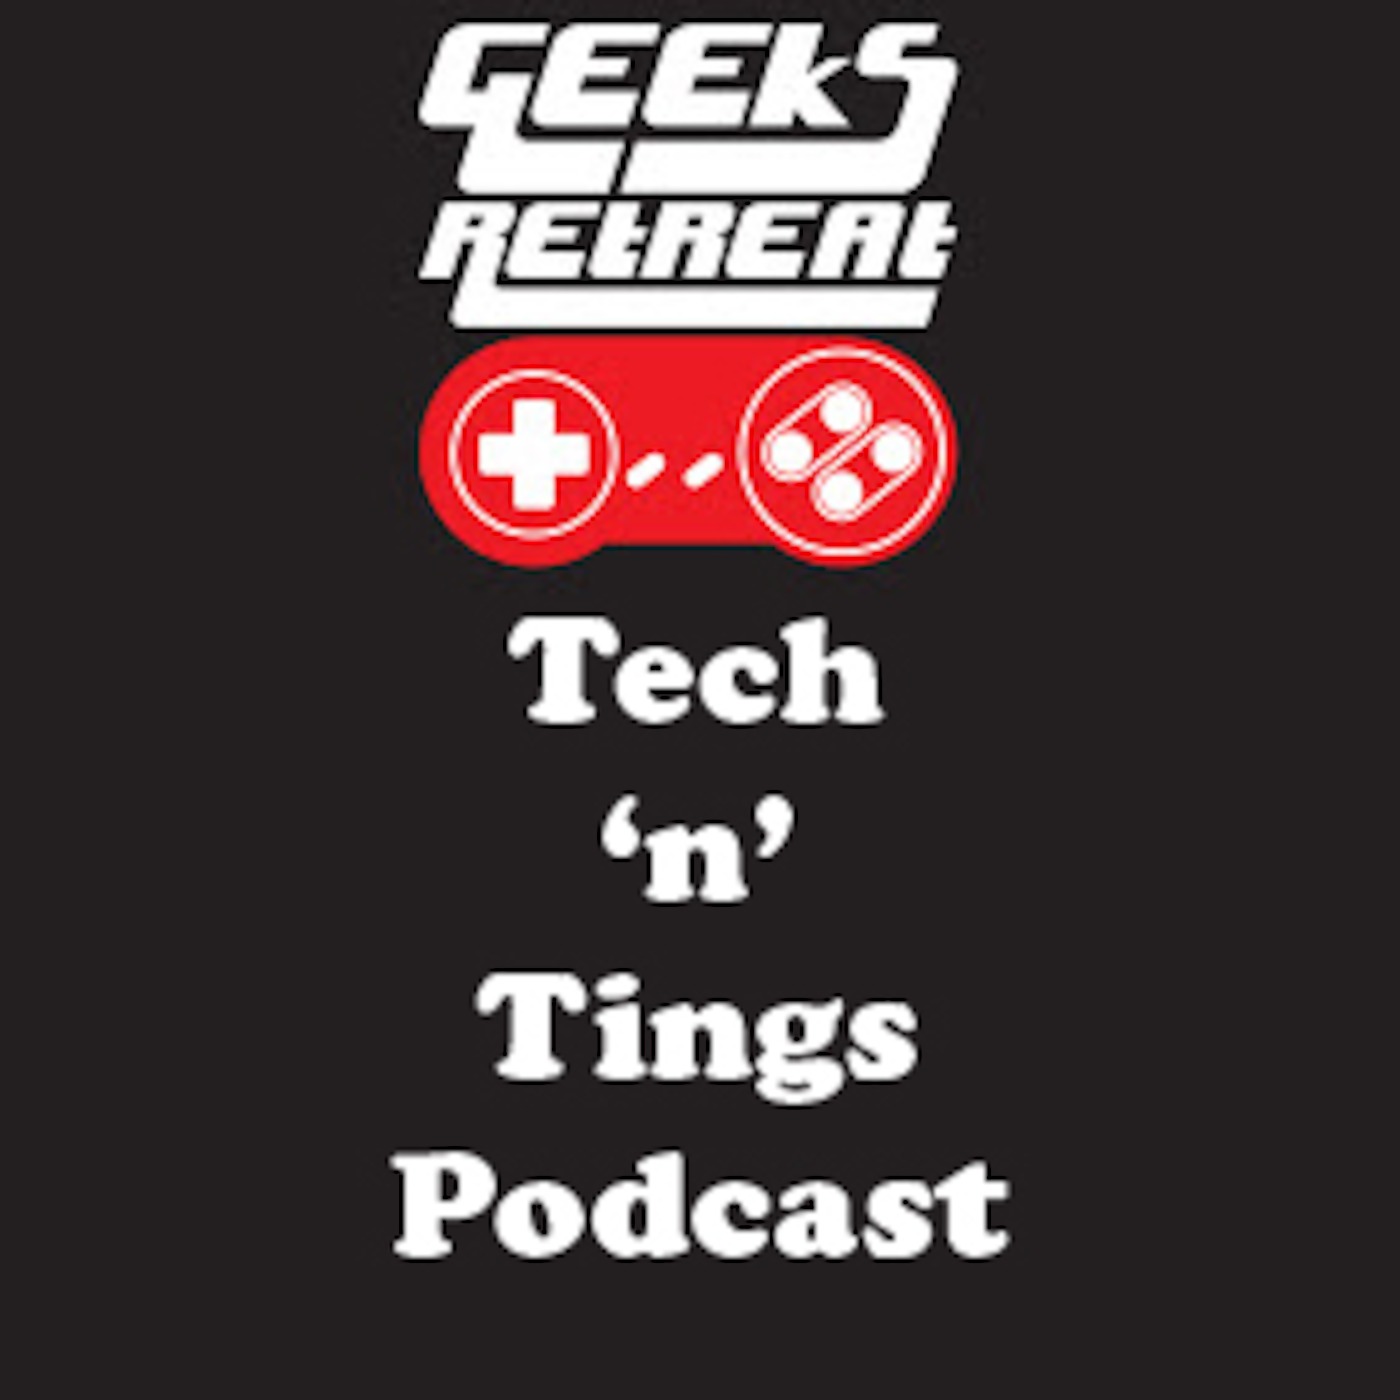 Geeks Retreat's Podcast